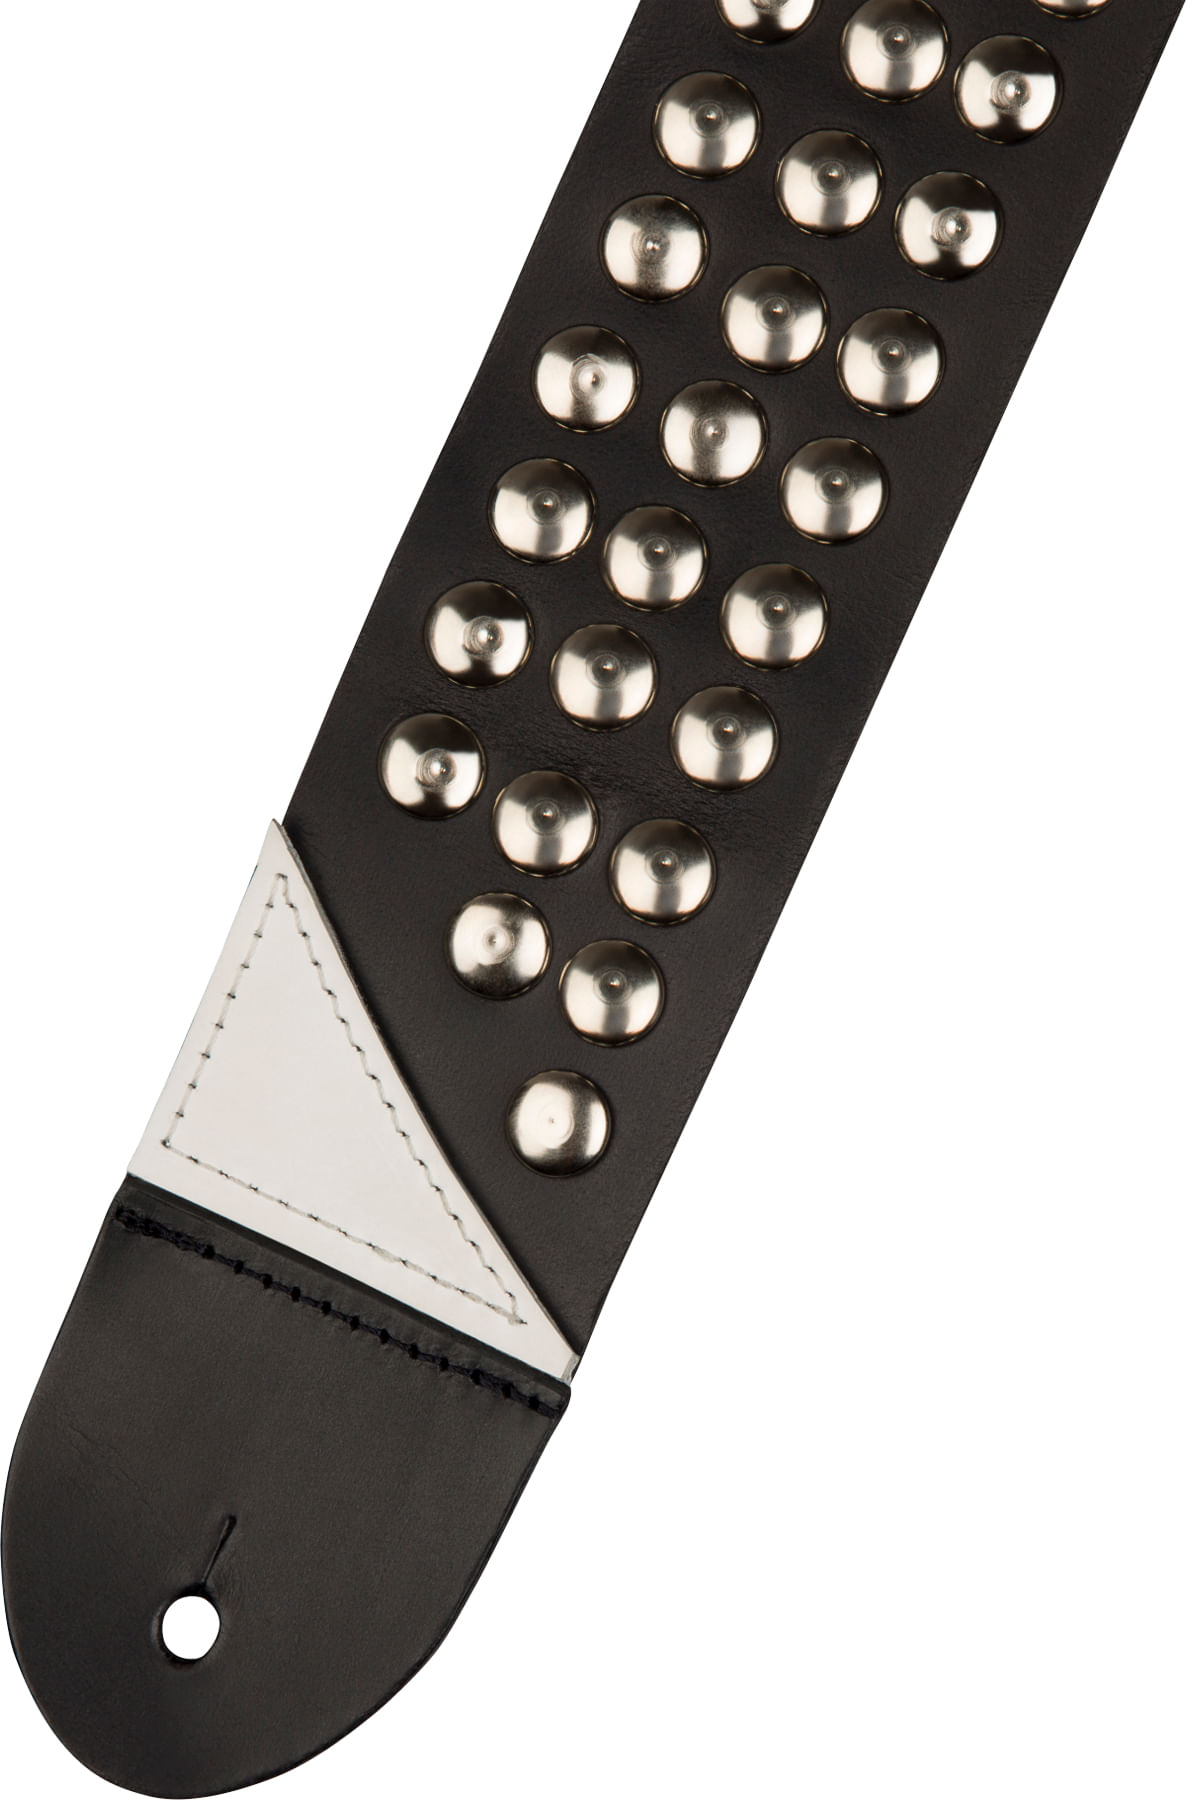 Jackson® Leather Guitar Strap